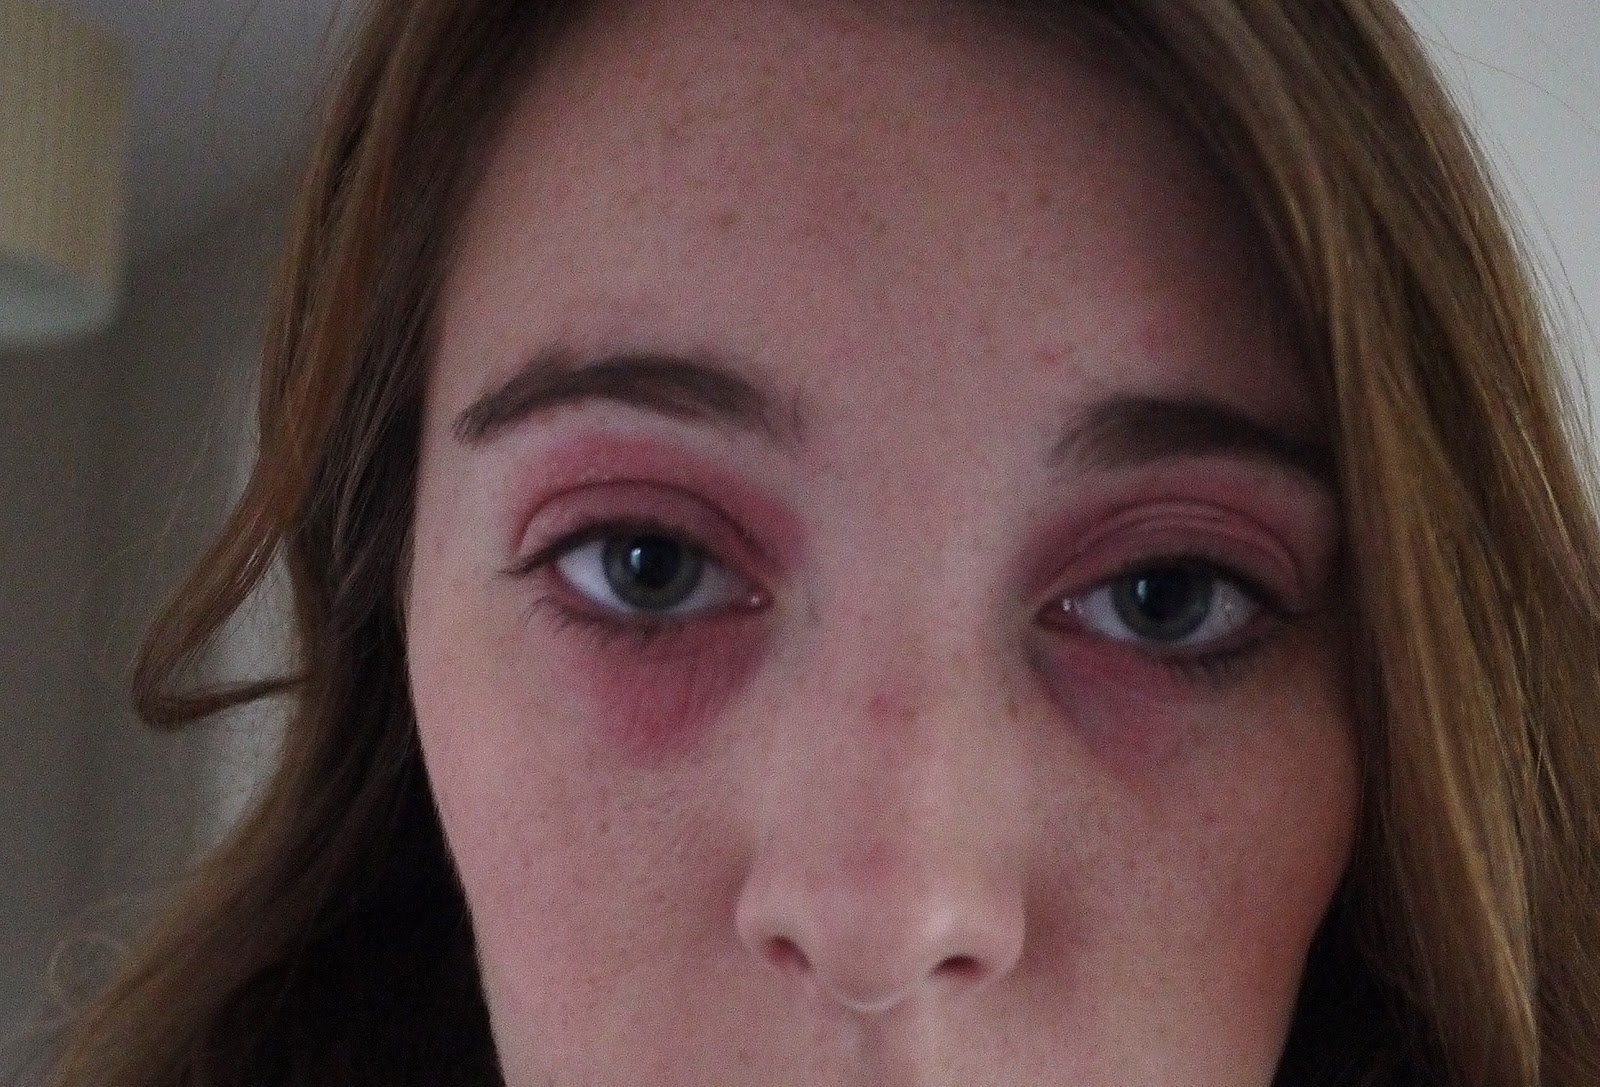 Allergic Reaction To Makeup Under Eyes